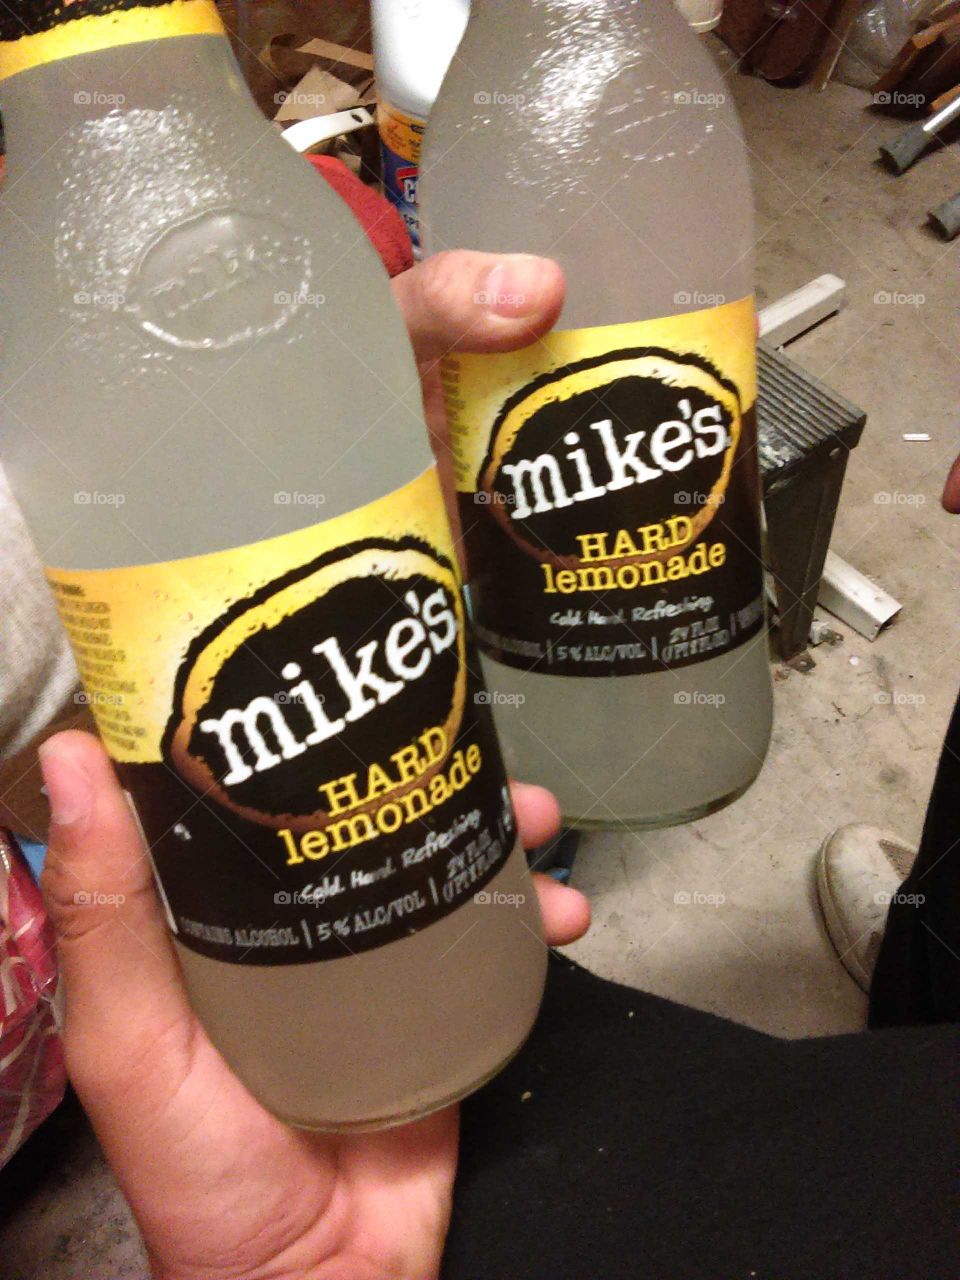 Mike's hard lemonade